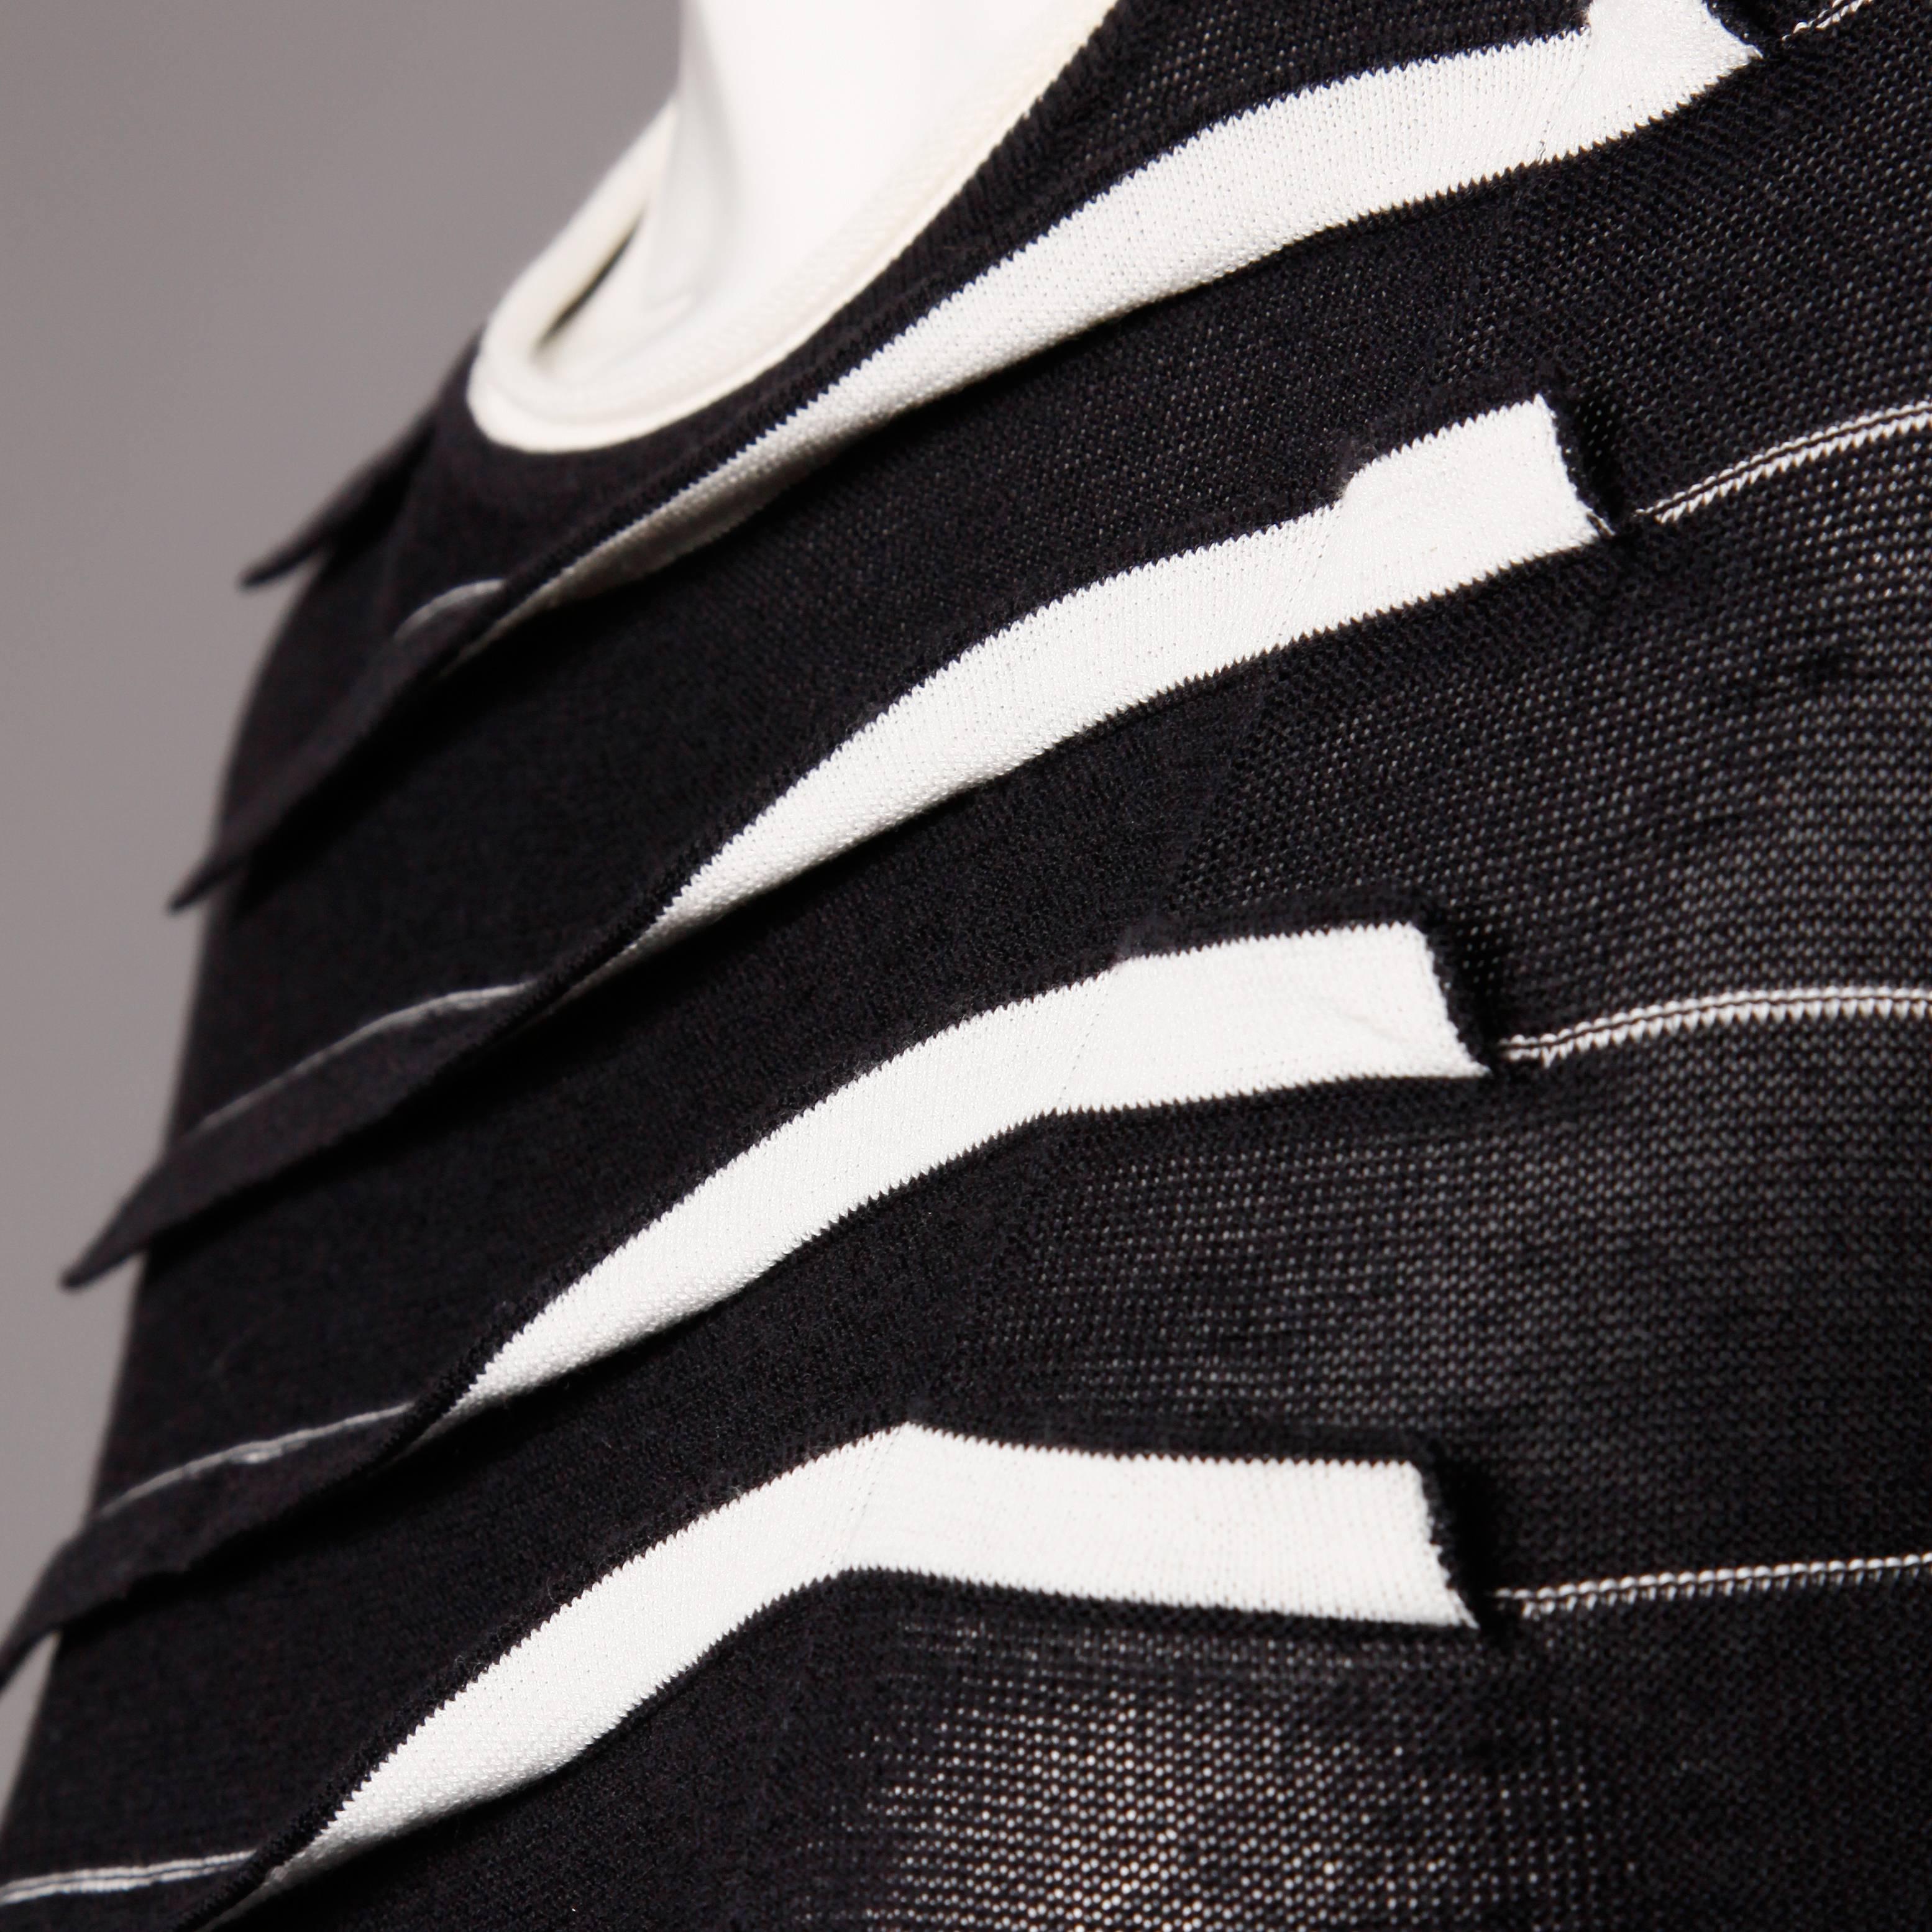 Armani Graphic Striped Knit Dress with Origami Chevron Pleats 1